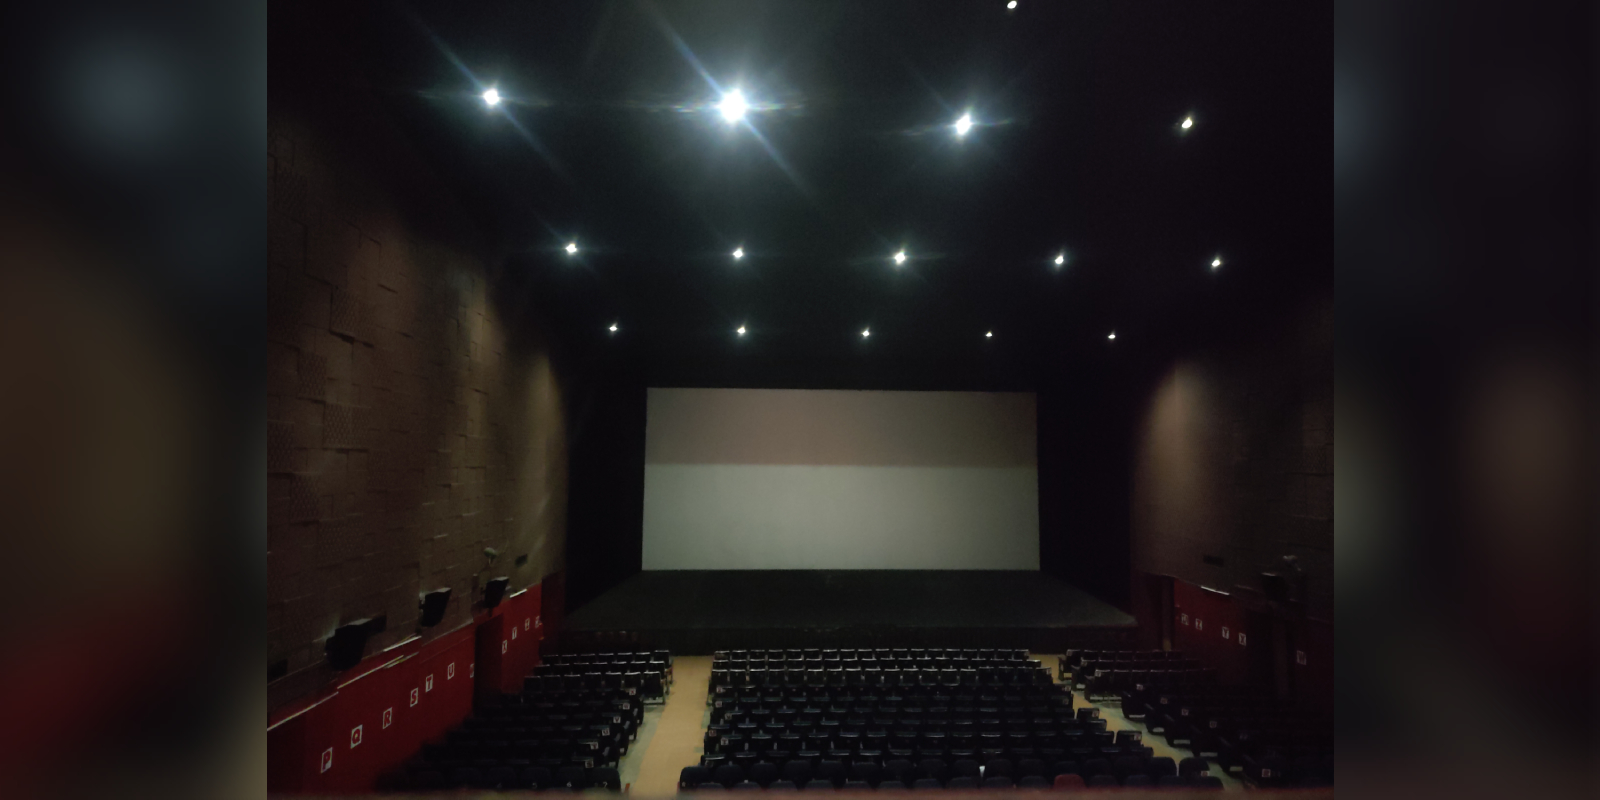 Kerala movie theatres face crisis closing down